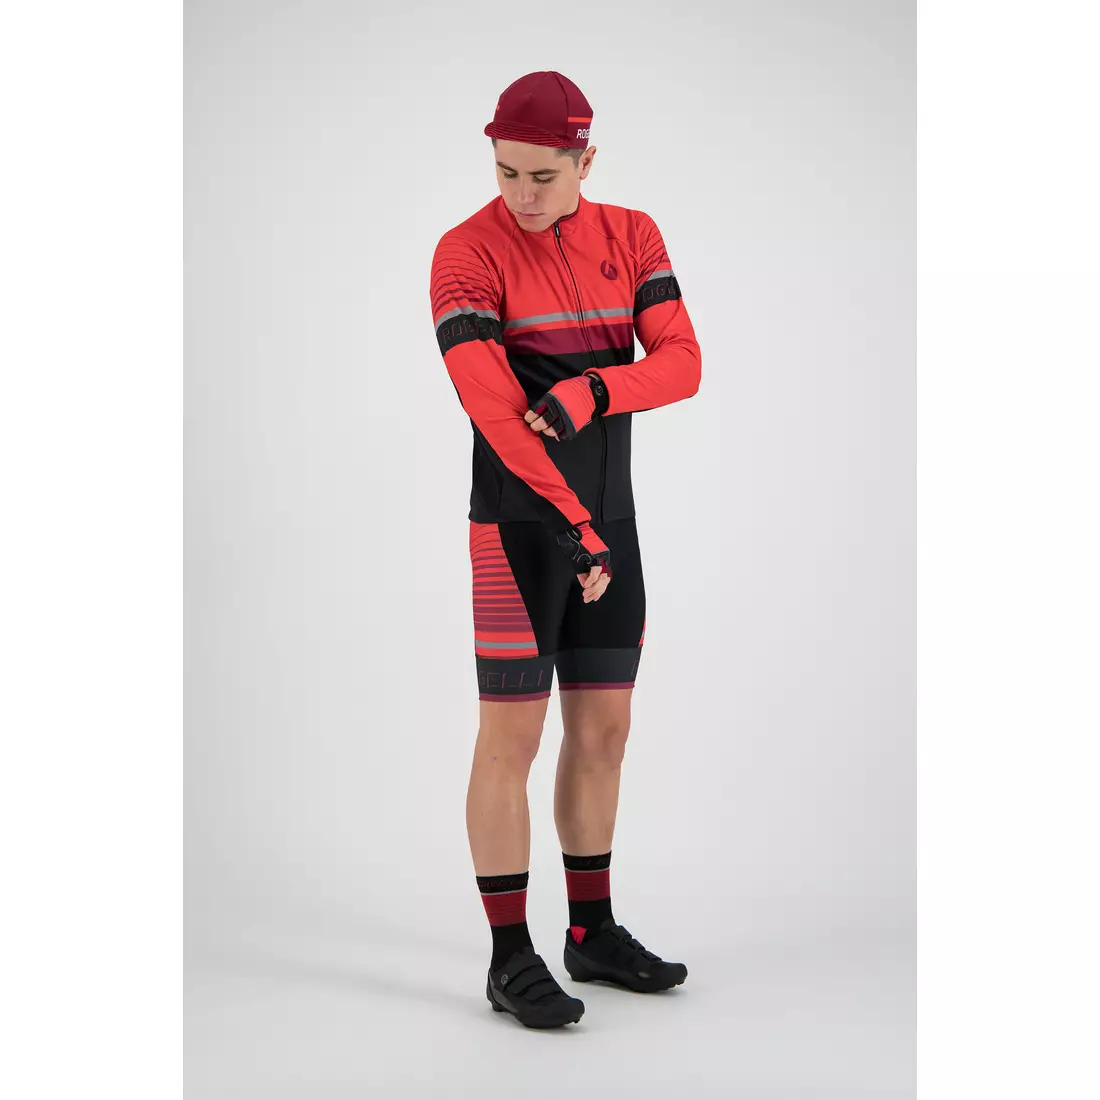 Rogelli HERO 001.267 Men bicycle sweatshirt Black/ Red/ Bordoux